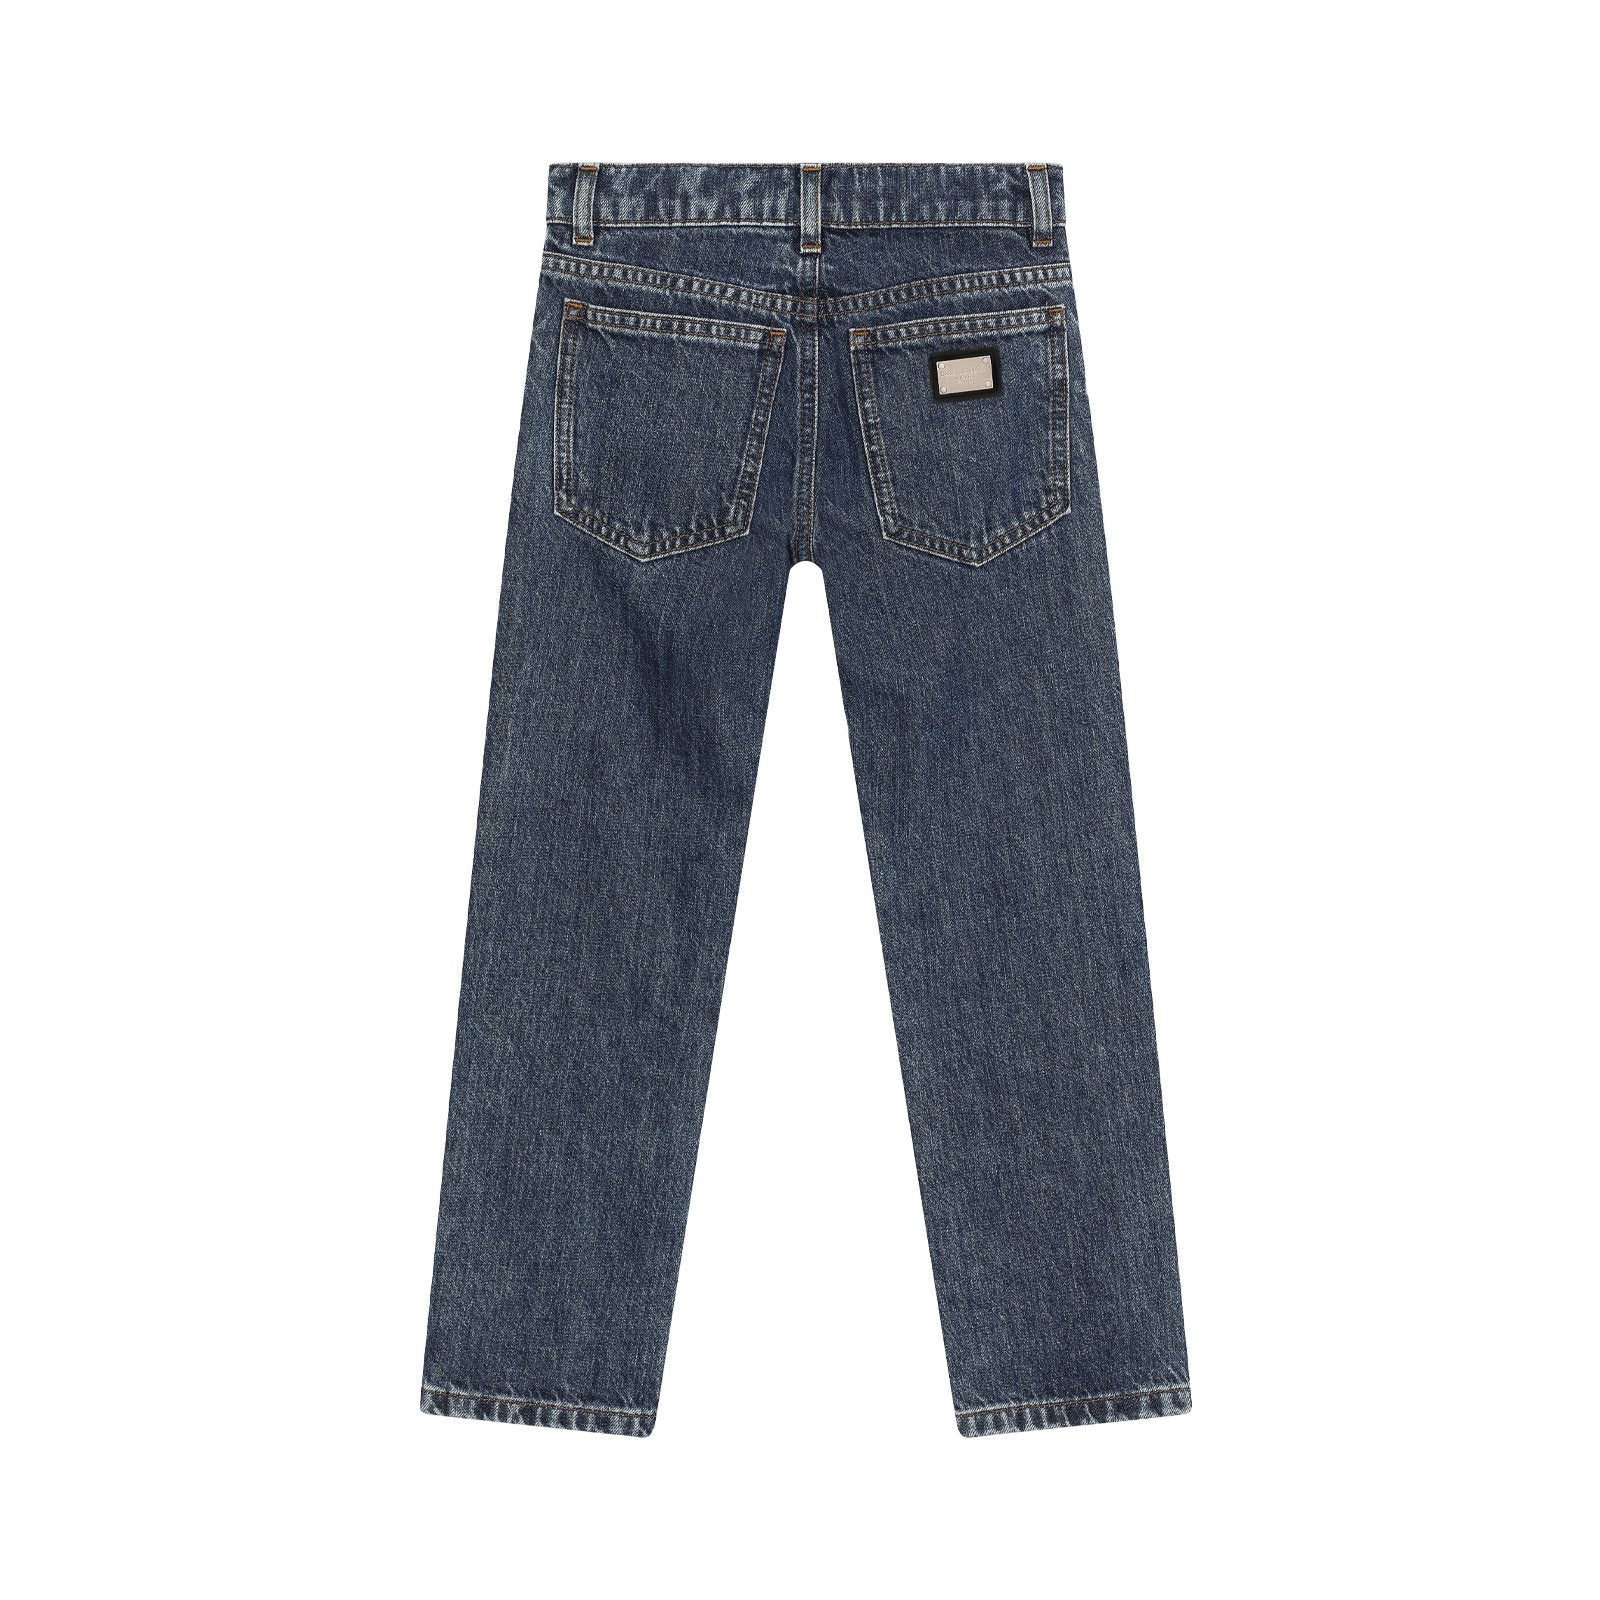 5-pocket stretch jeans